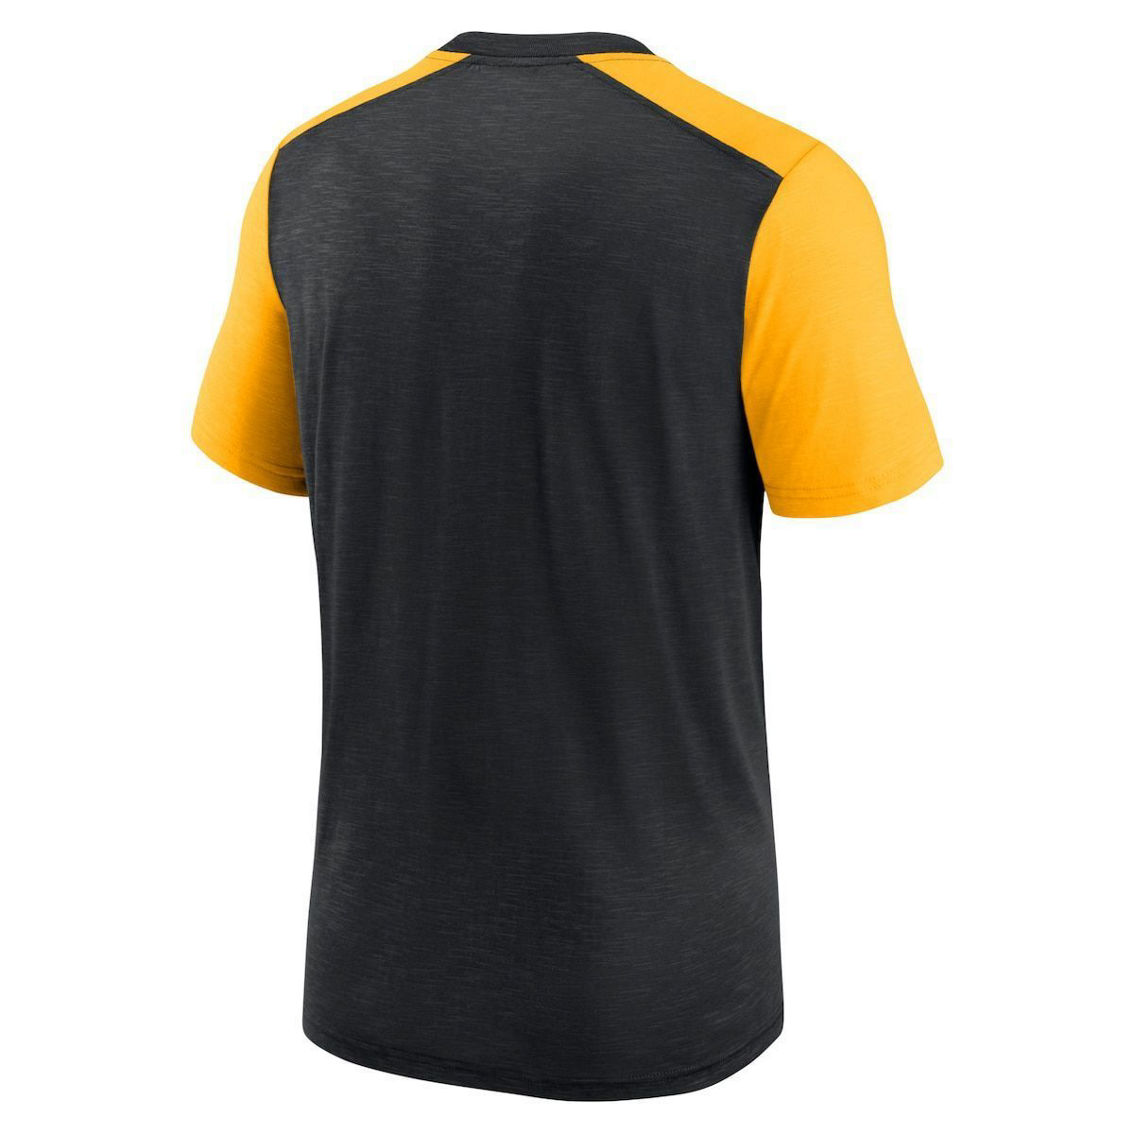 Nike Men's Heathered Black/Heathered Gold Color Block Team Name T-Shirt - Image 4 of 4